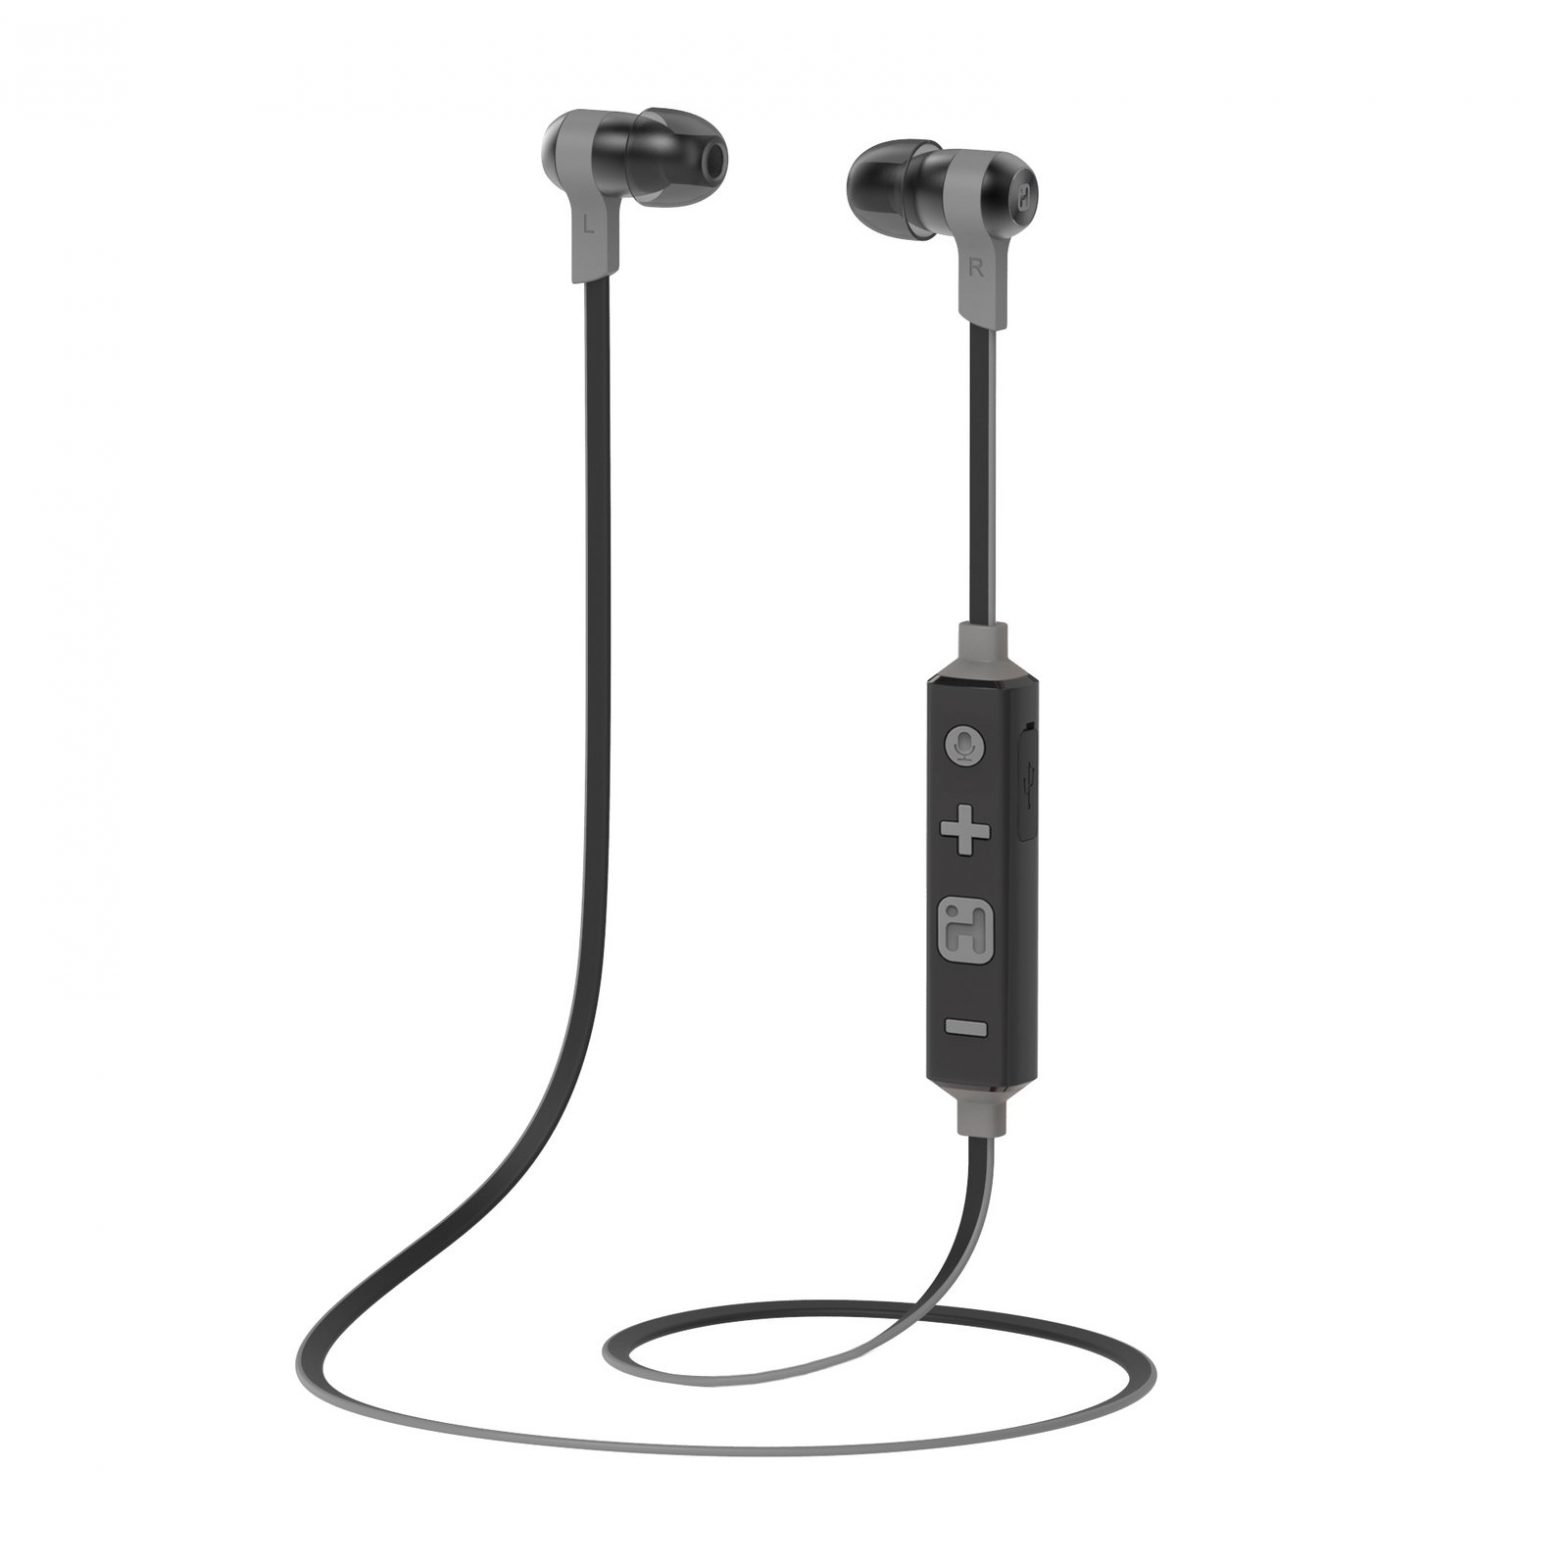 iHome iB39 QSG Bluetooth Earbuds User Manual